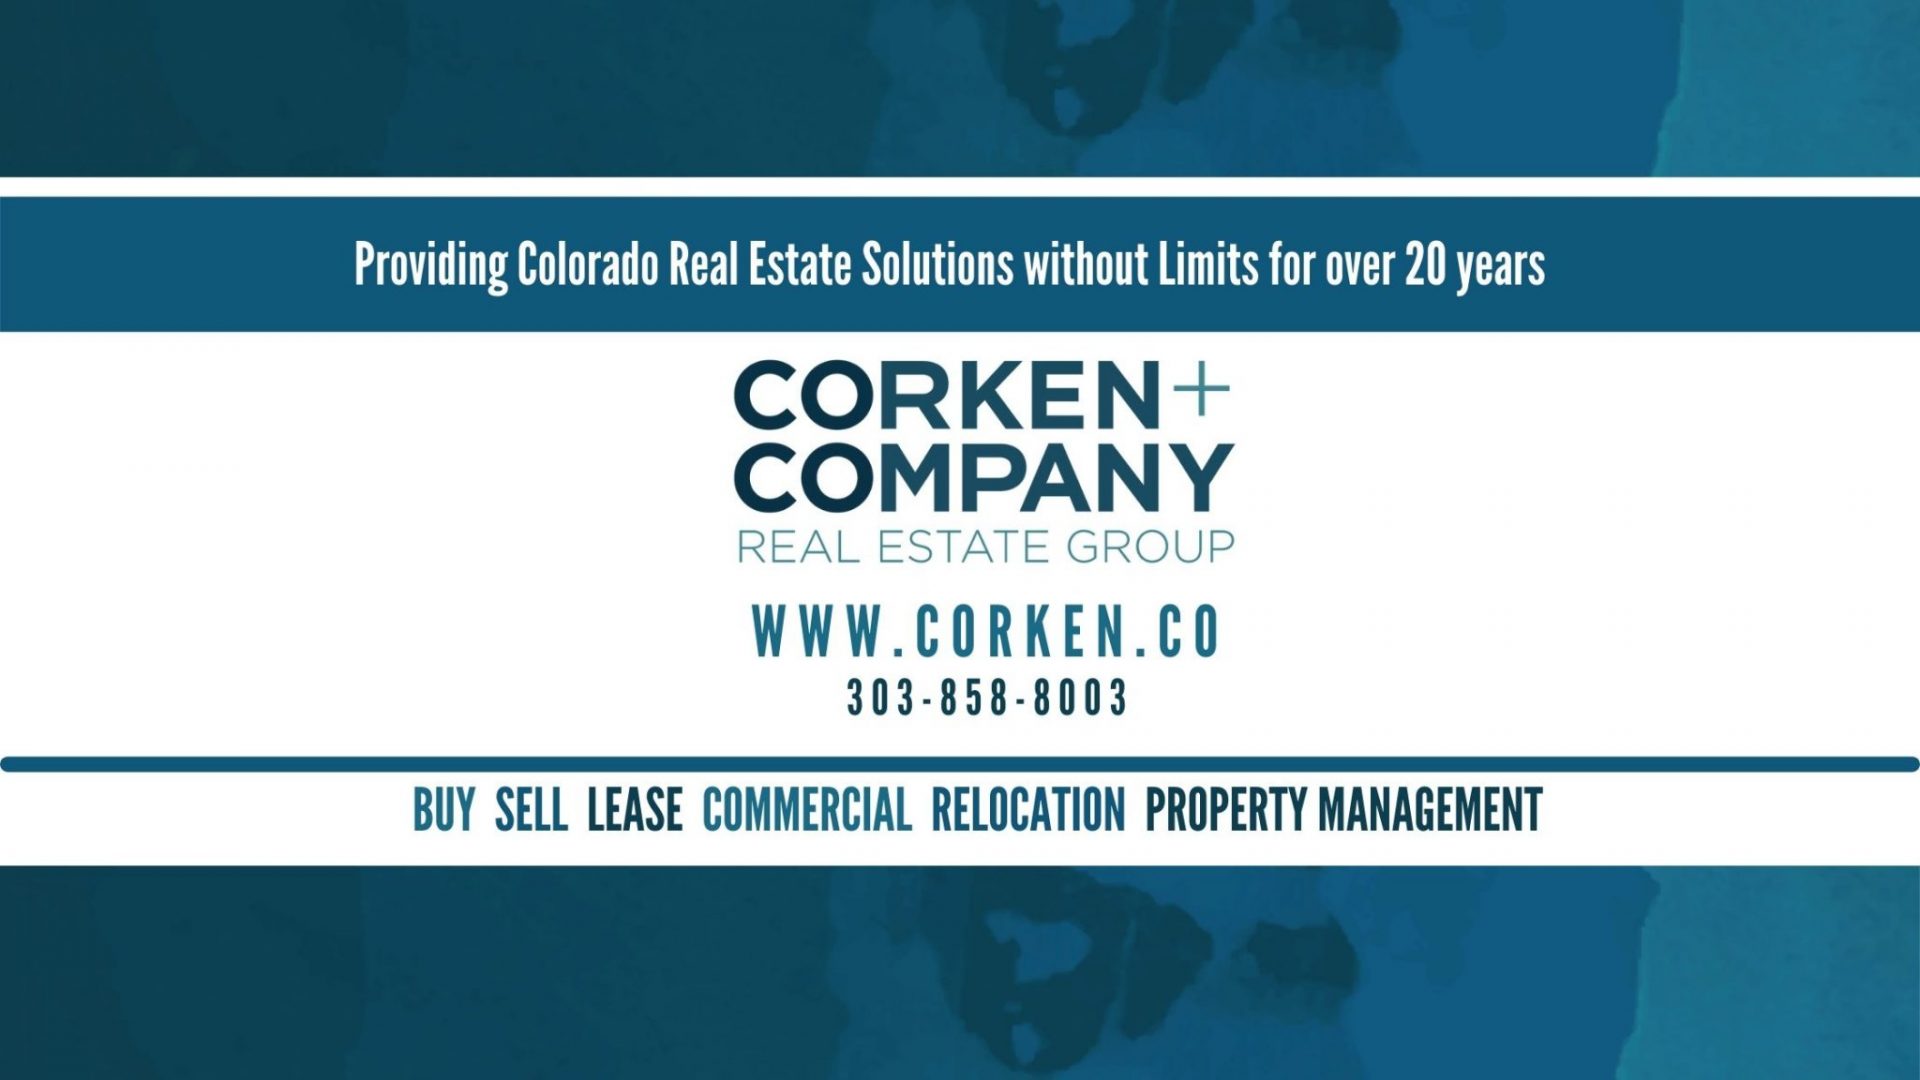 Corken + Company Real Estate Group